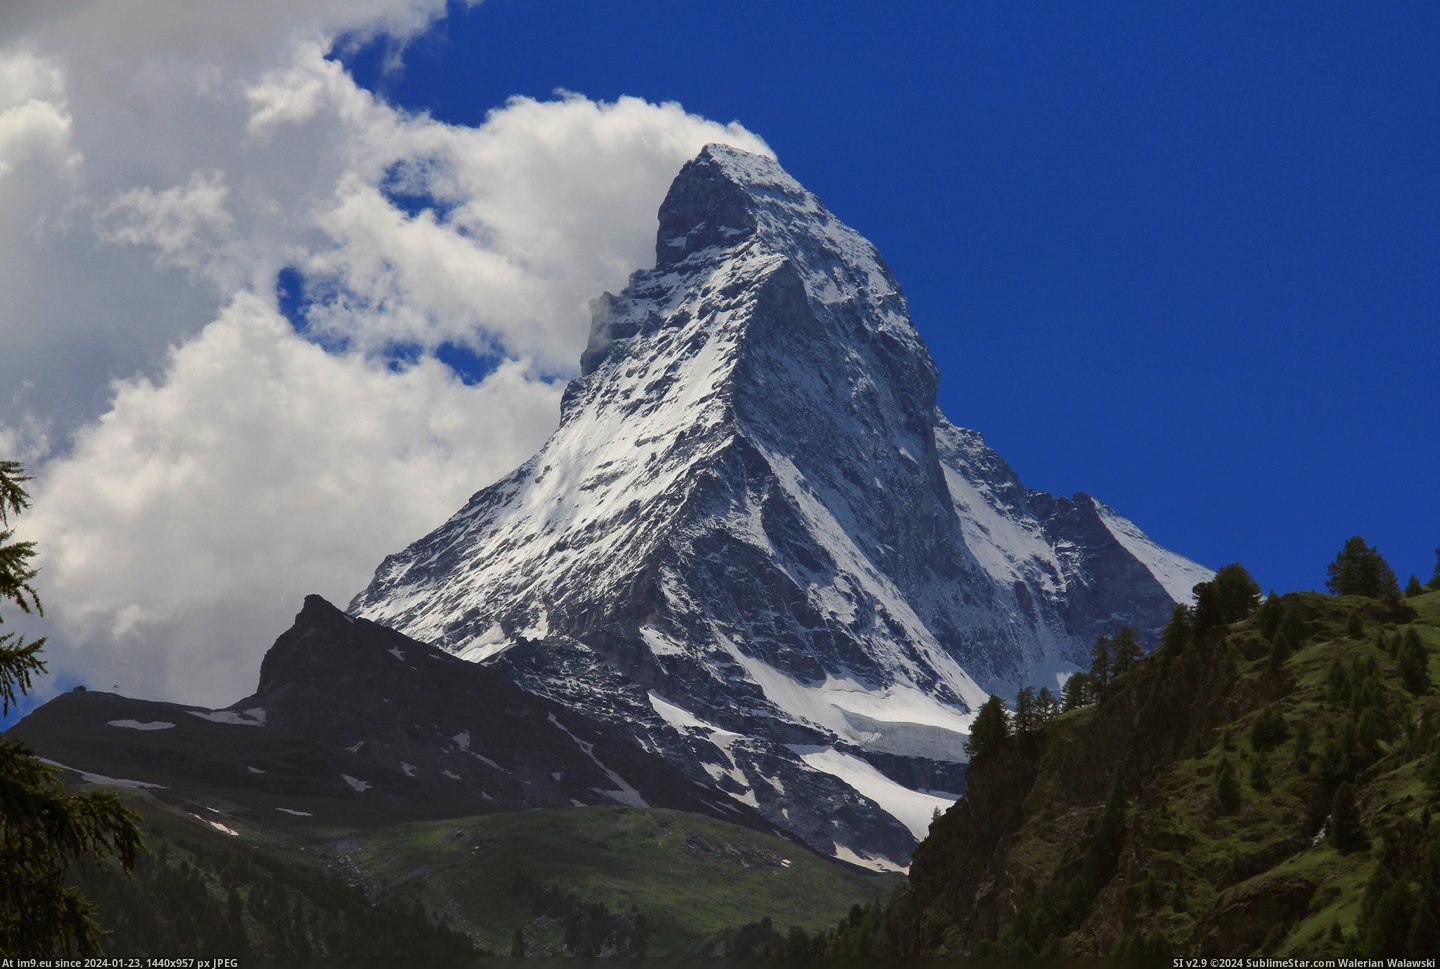 #5184x3456 #Matterhorn #Zermatt #Switzerland [Earthporn] The Matterhorn, from Zermatt, Switzerland. [5184x3456] [OC] Pic. (Image of album My r/EARTHPORN favs))